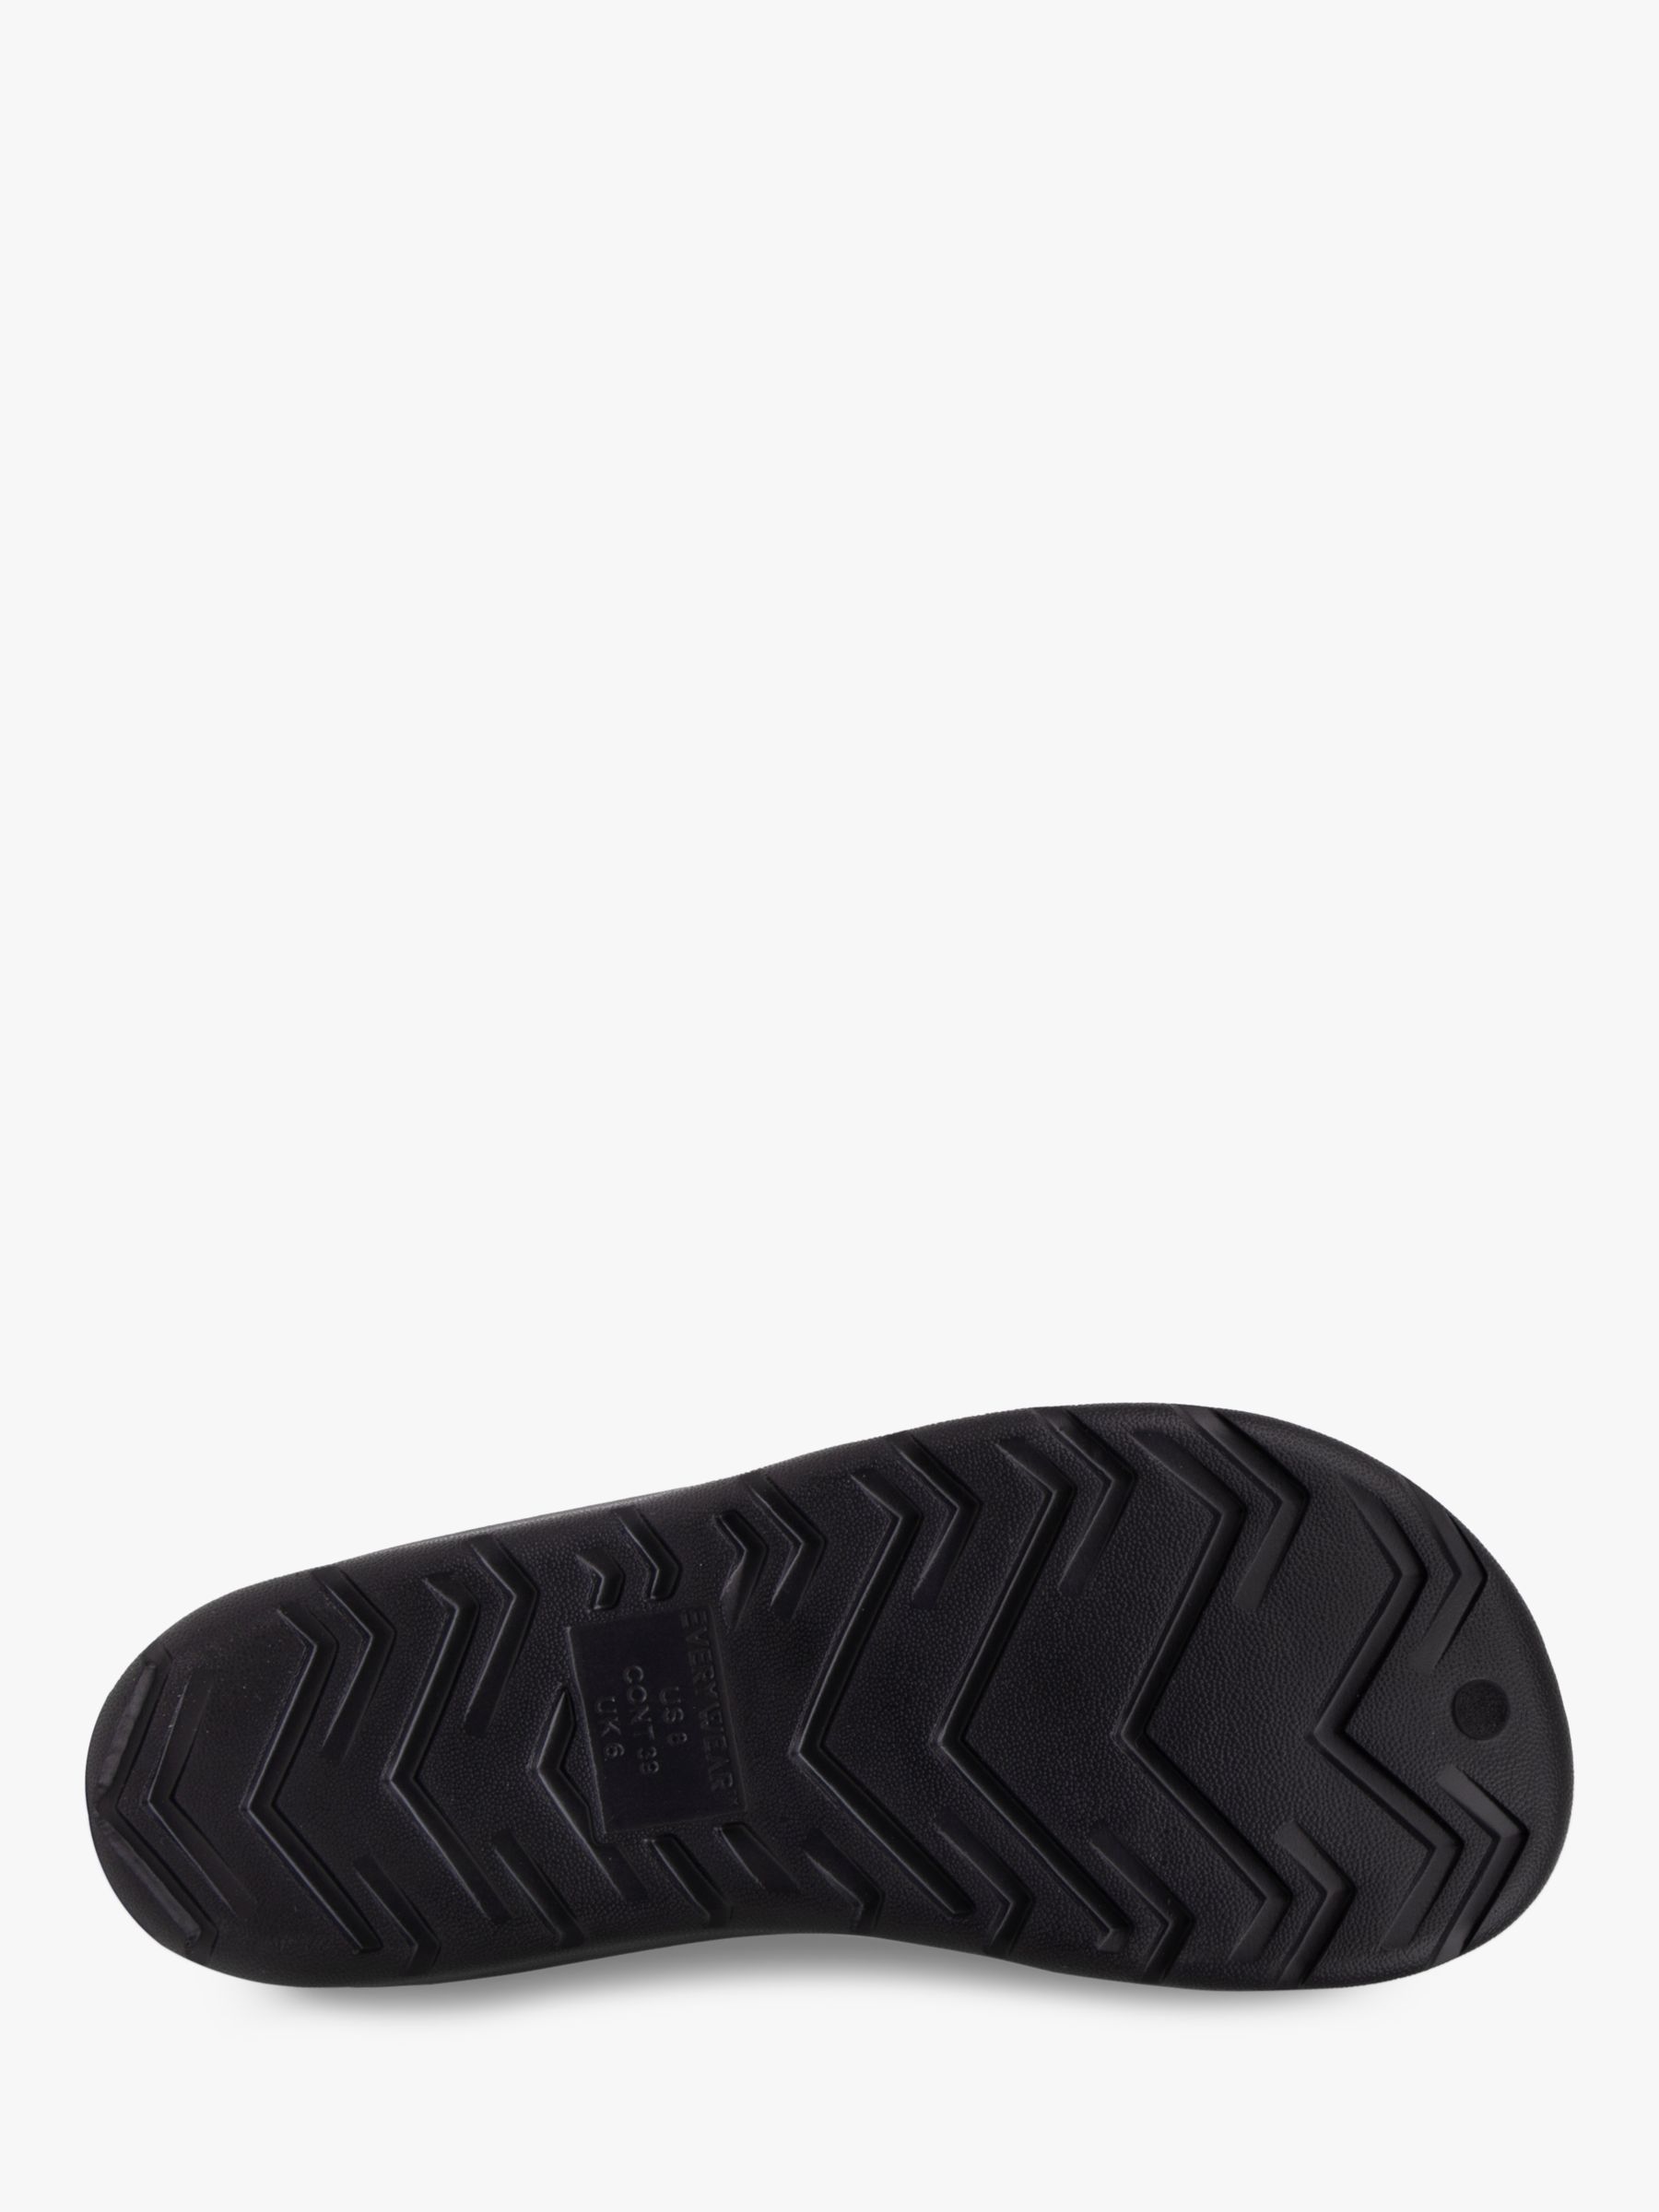 totes SOLBOUNCE Cross Strap Slider Sandals, Black at John Lewis & Partners